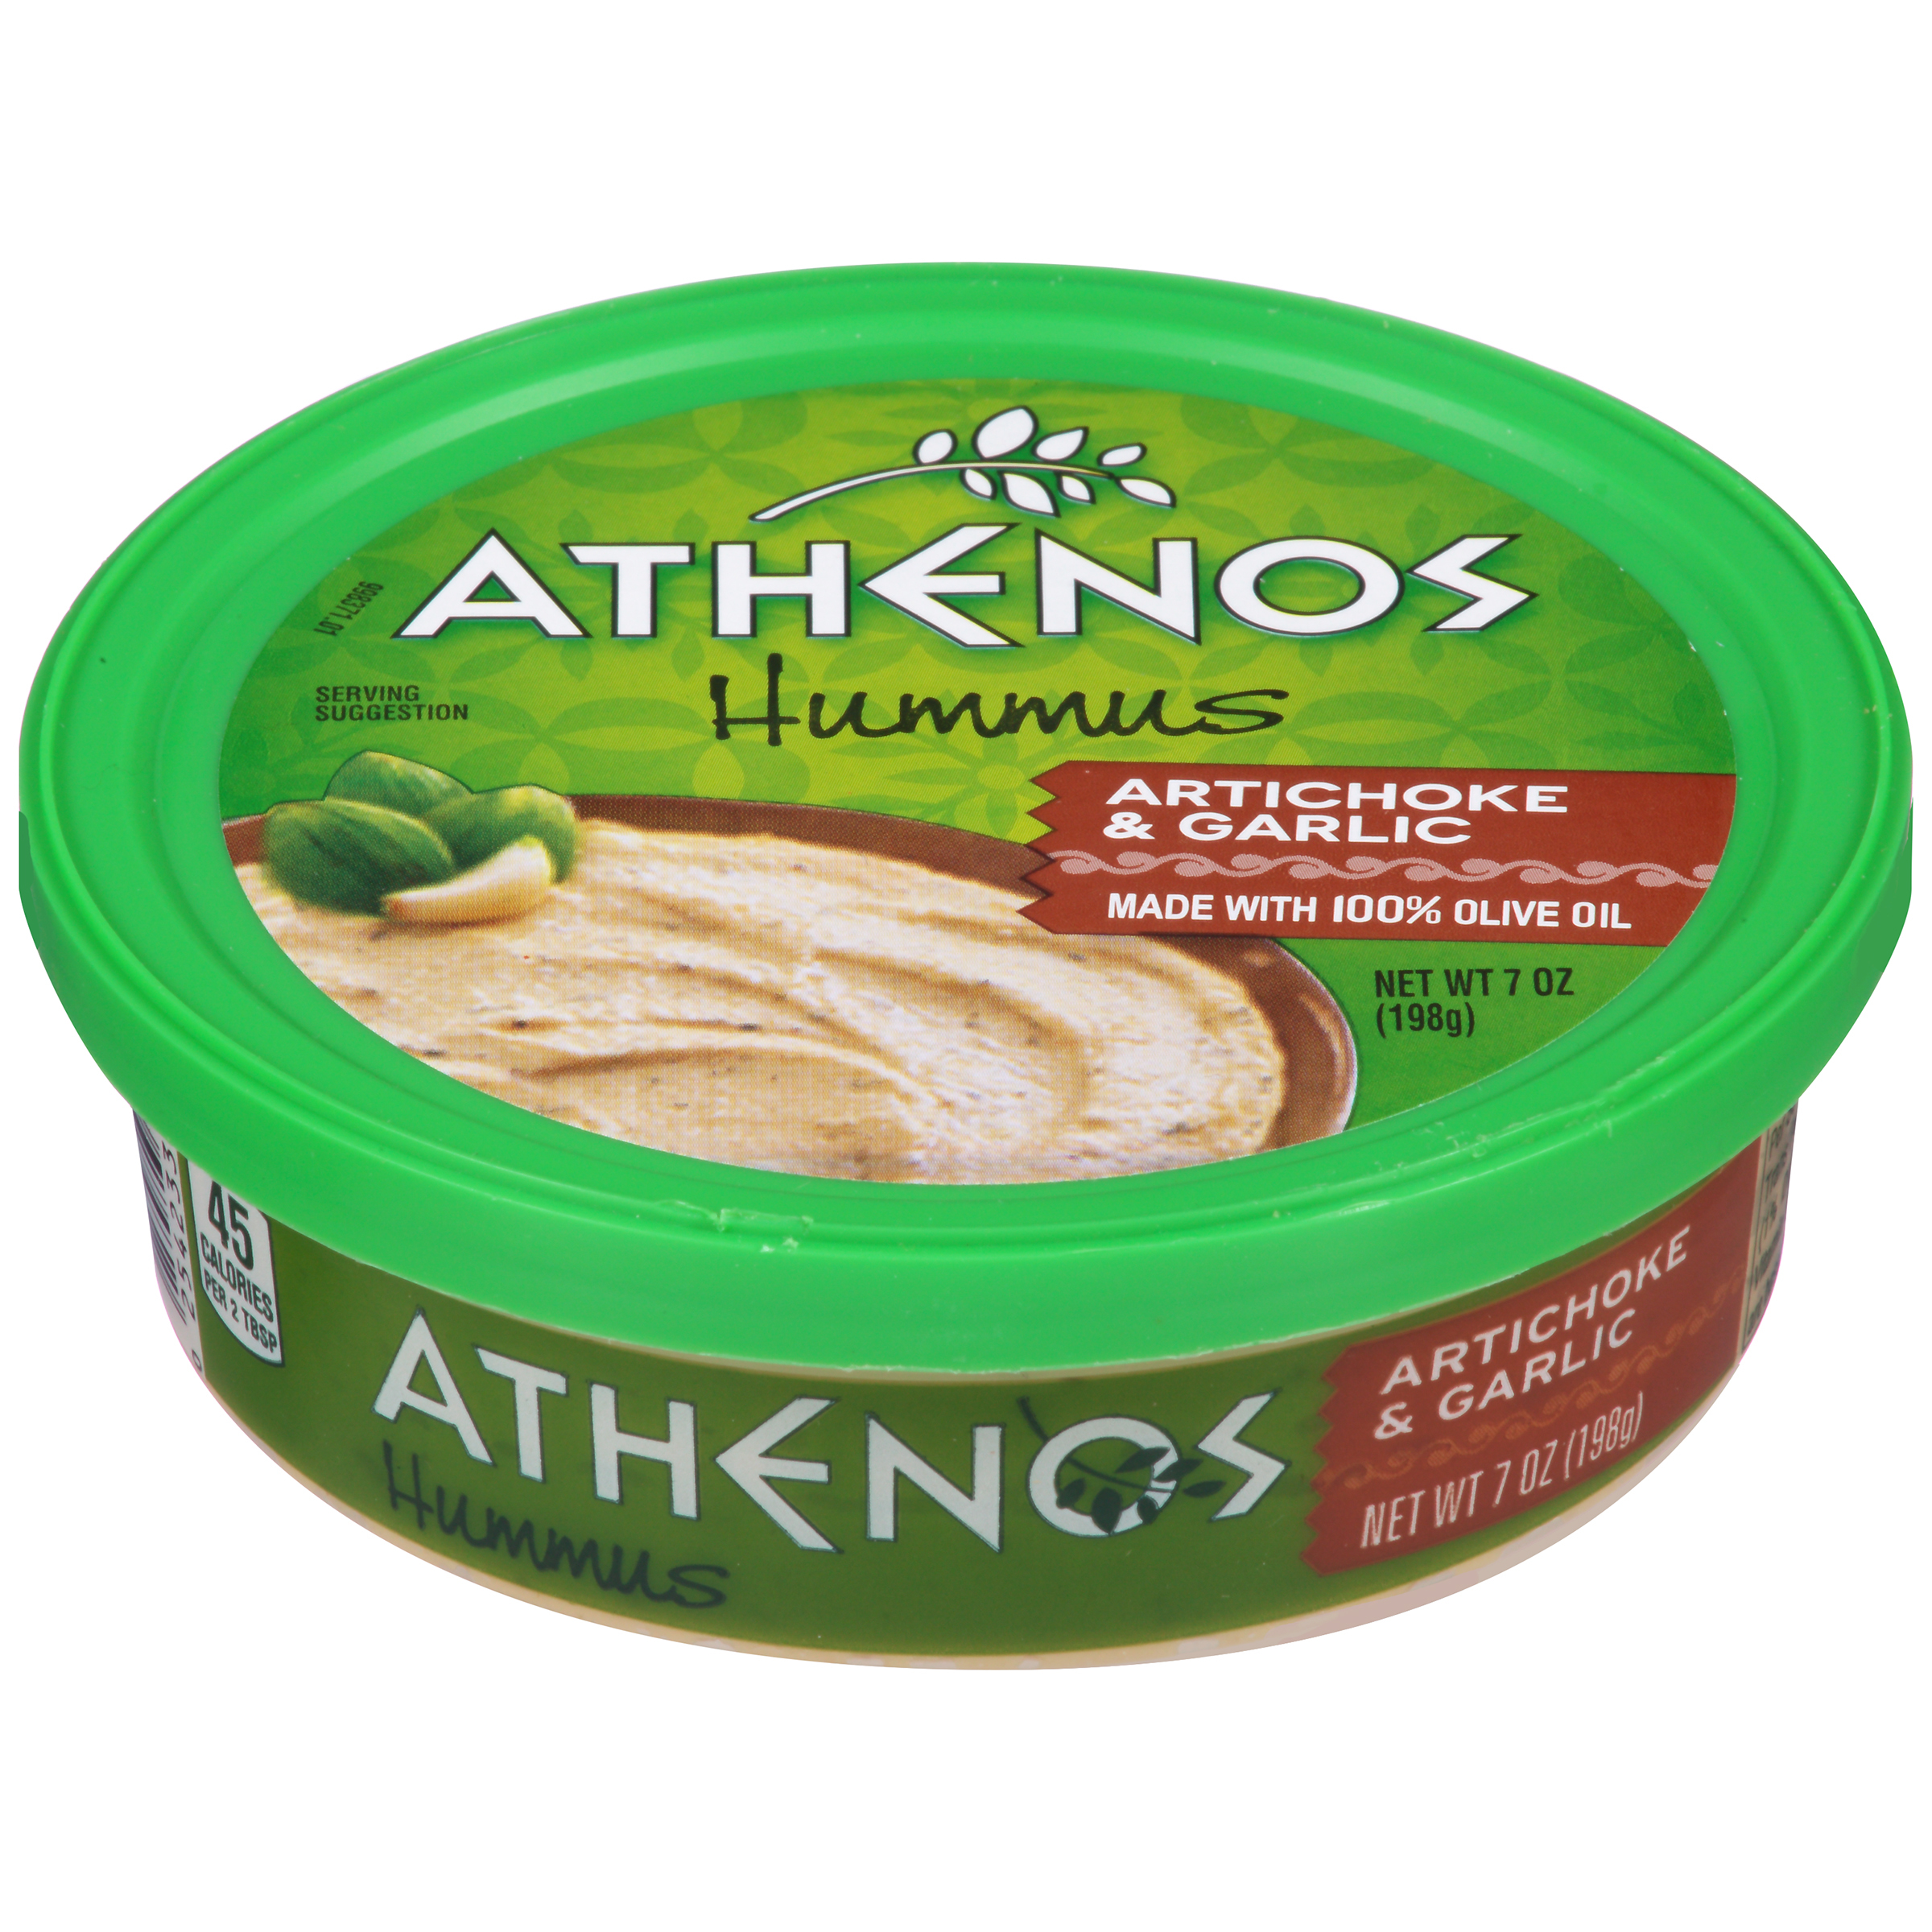 Athenos More Products - Artichoke Garlic Hummus